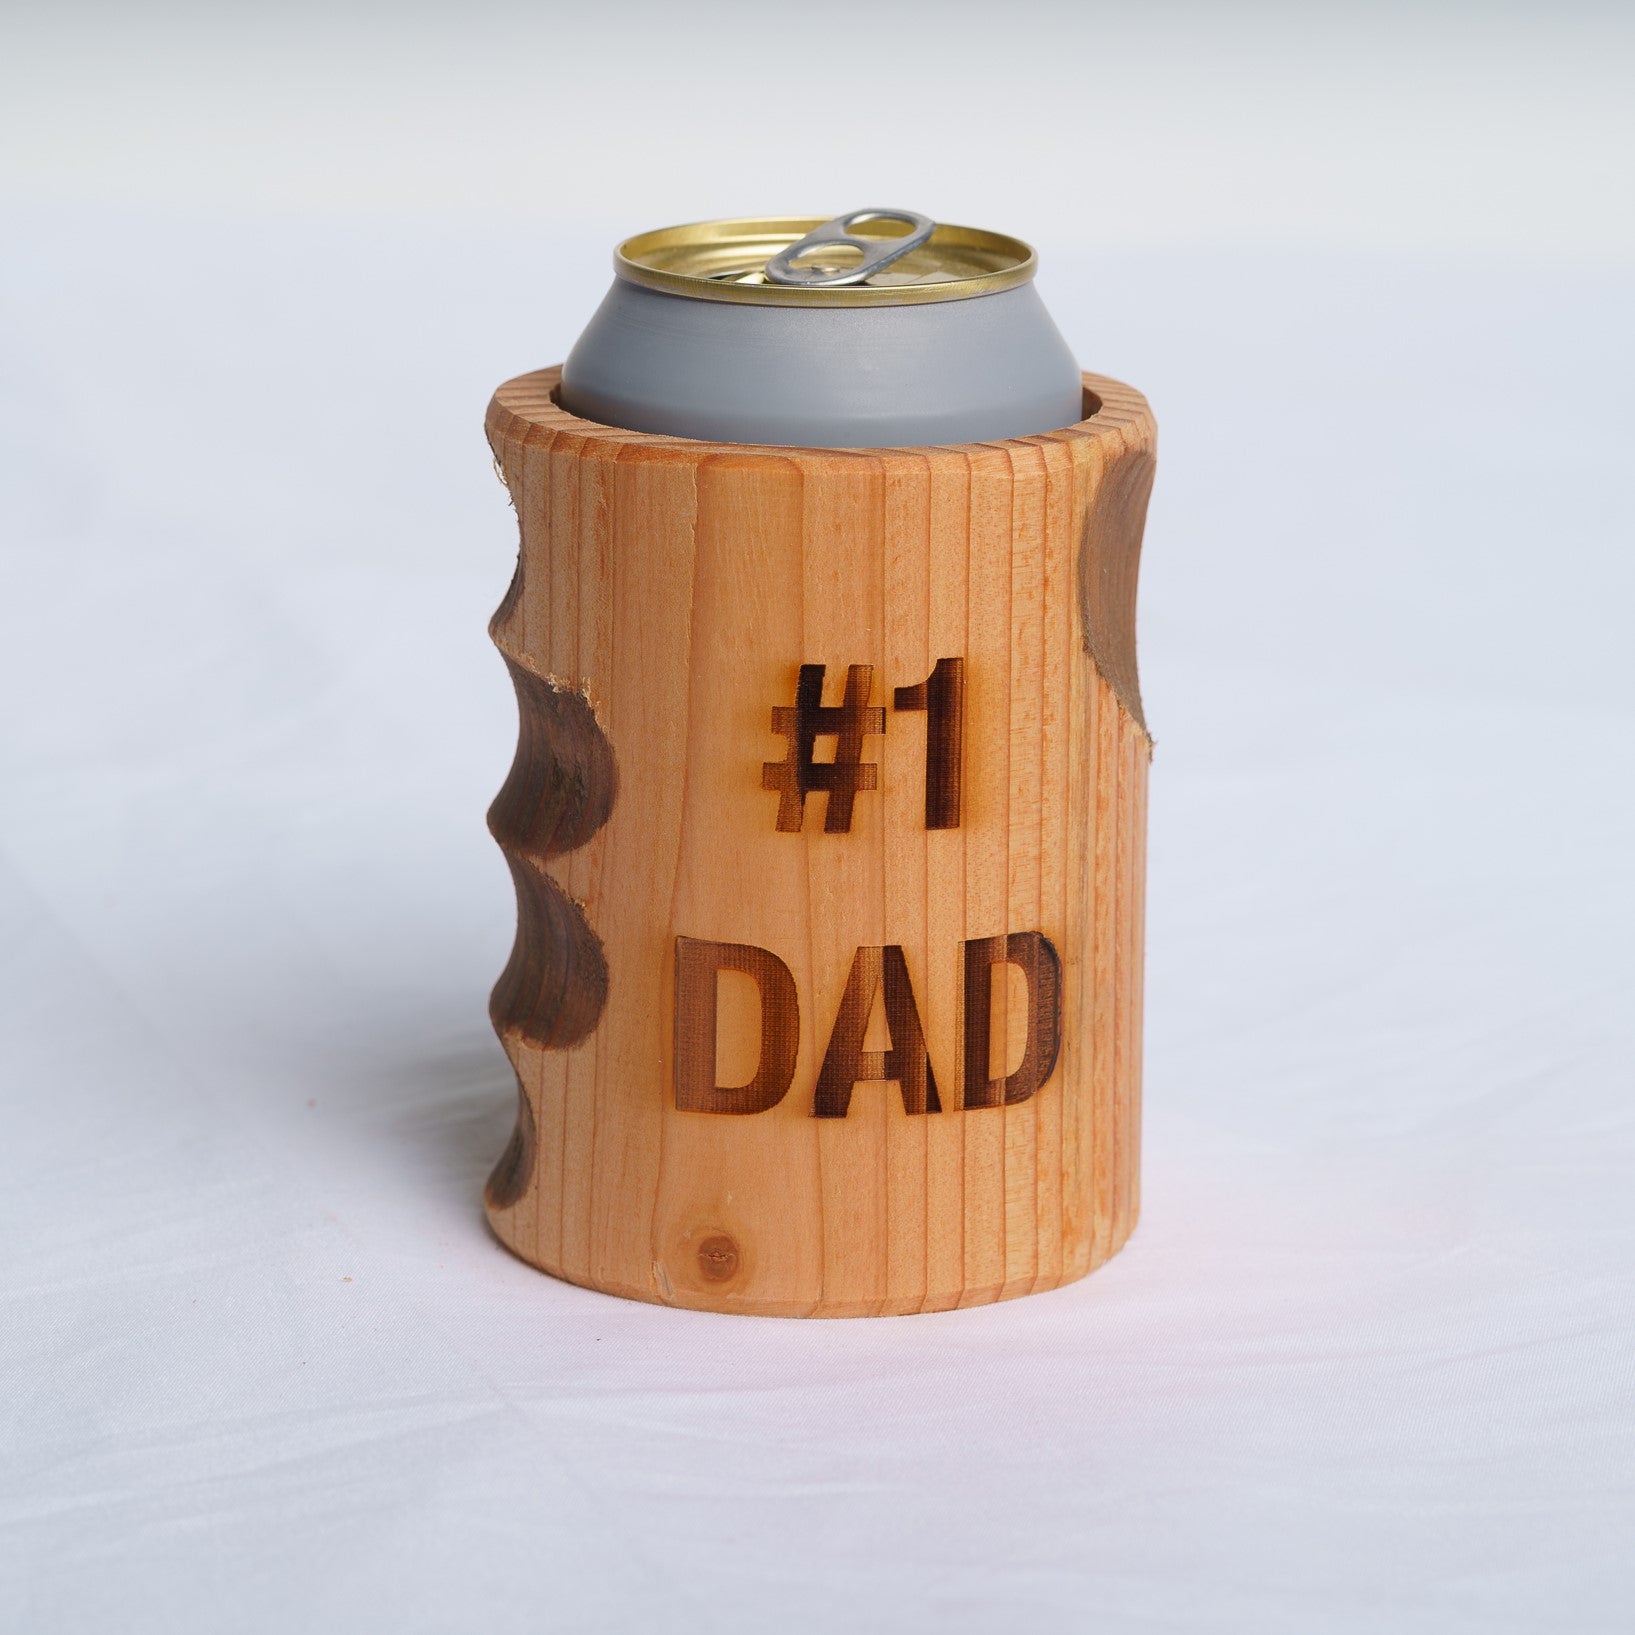 Engraved #1 DAD Wooden Beer Can Cooler